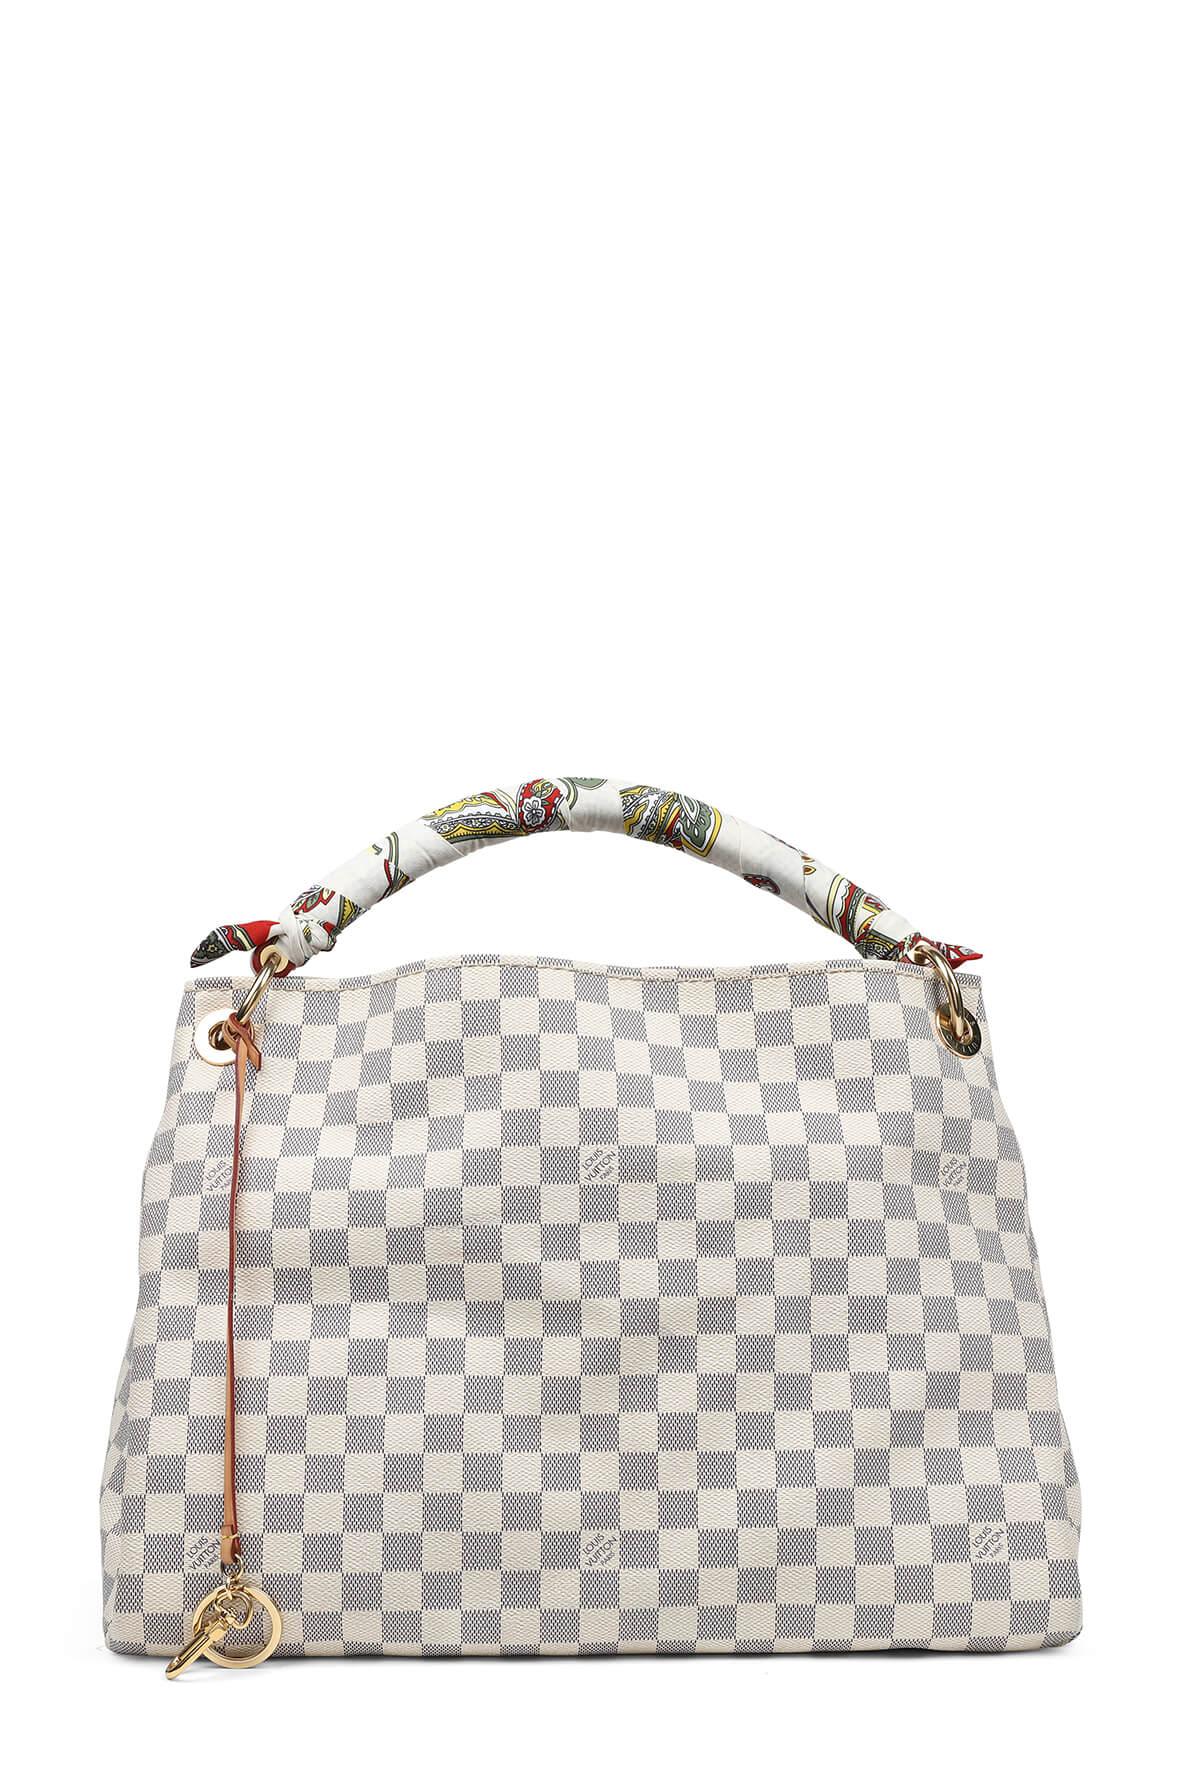 Louis Vuitton Artsy Handbag Damier MM, crafted from damier azur